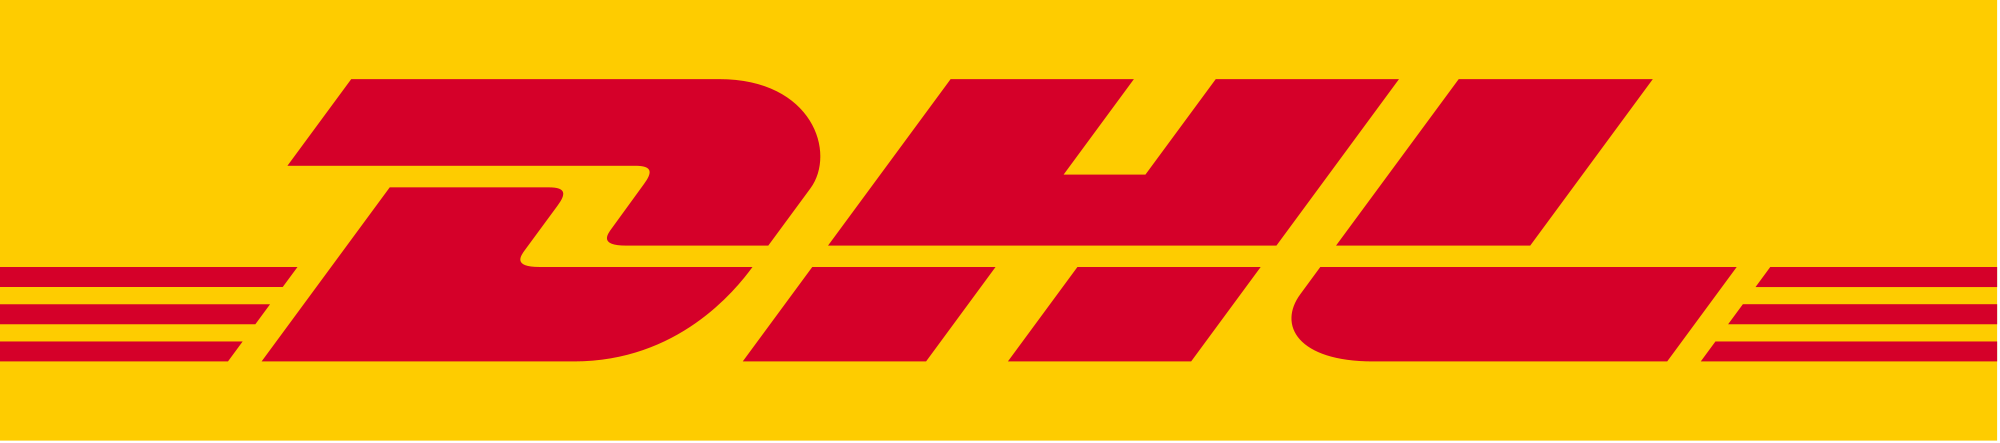 Kurier DHL, firma kurierska DHL, logotyp DHL